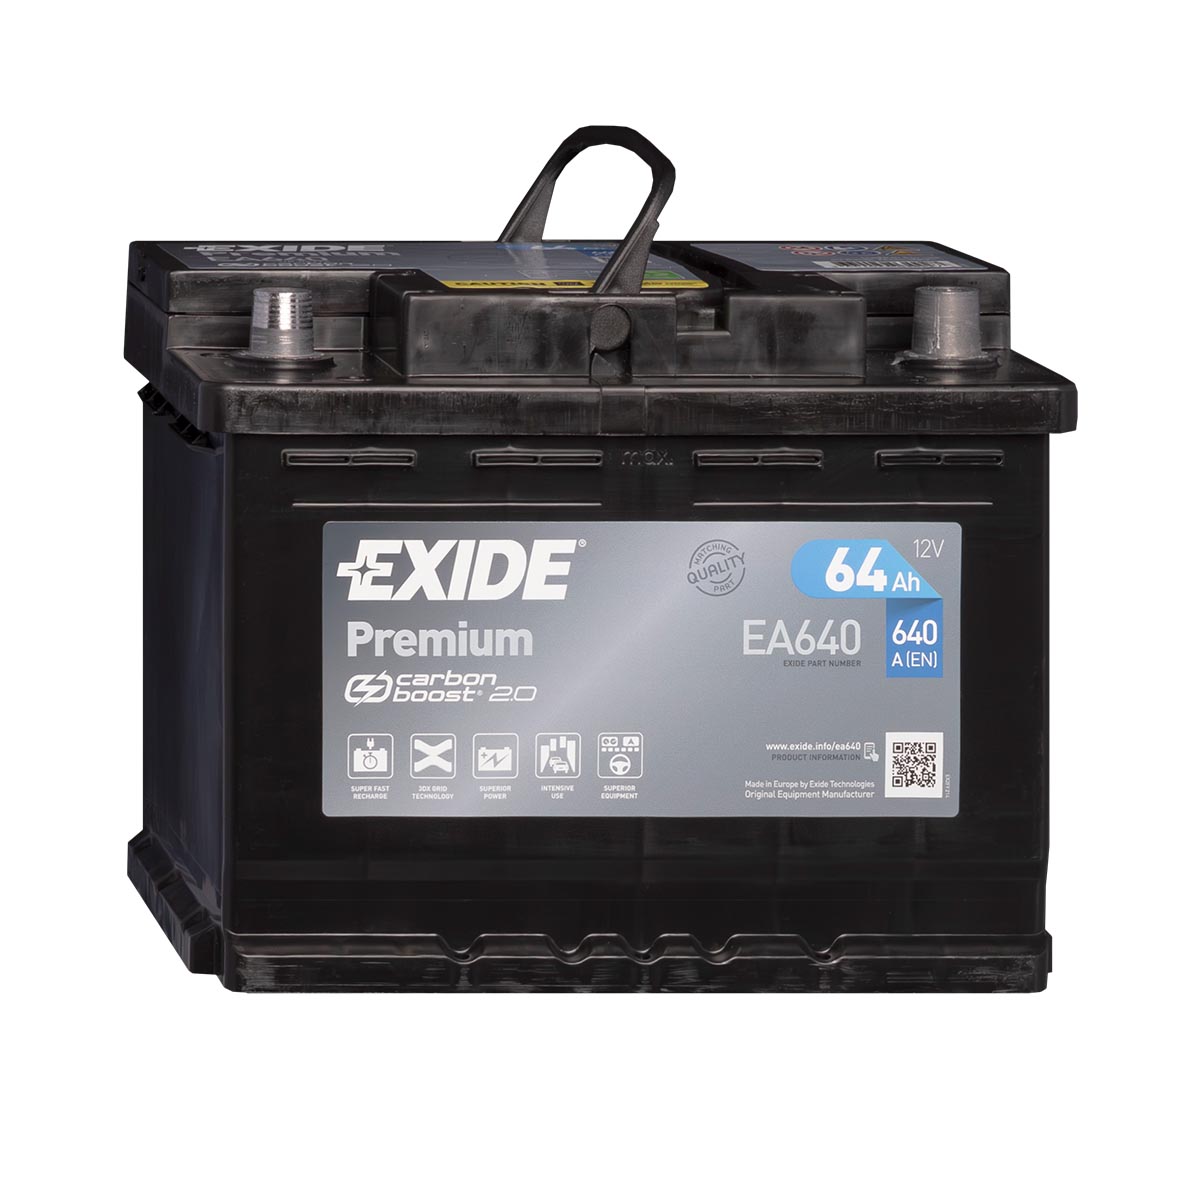 EXIDE EA640 Premium Carbon Boost Car Battery 12V 64Ah 640A Starter Battery  Car Battery – Replaces 58Ah 60Ah 61Ah 62Ah 63Ah + 1x Battery Pole Grease